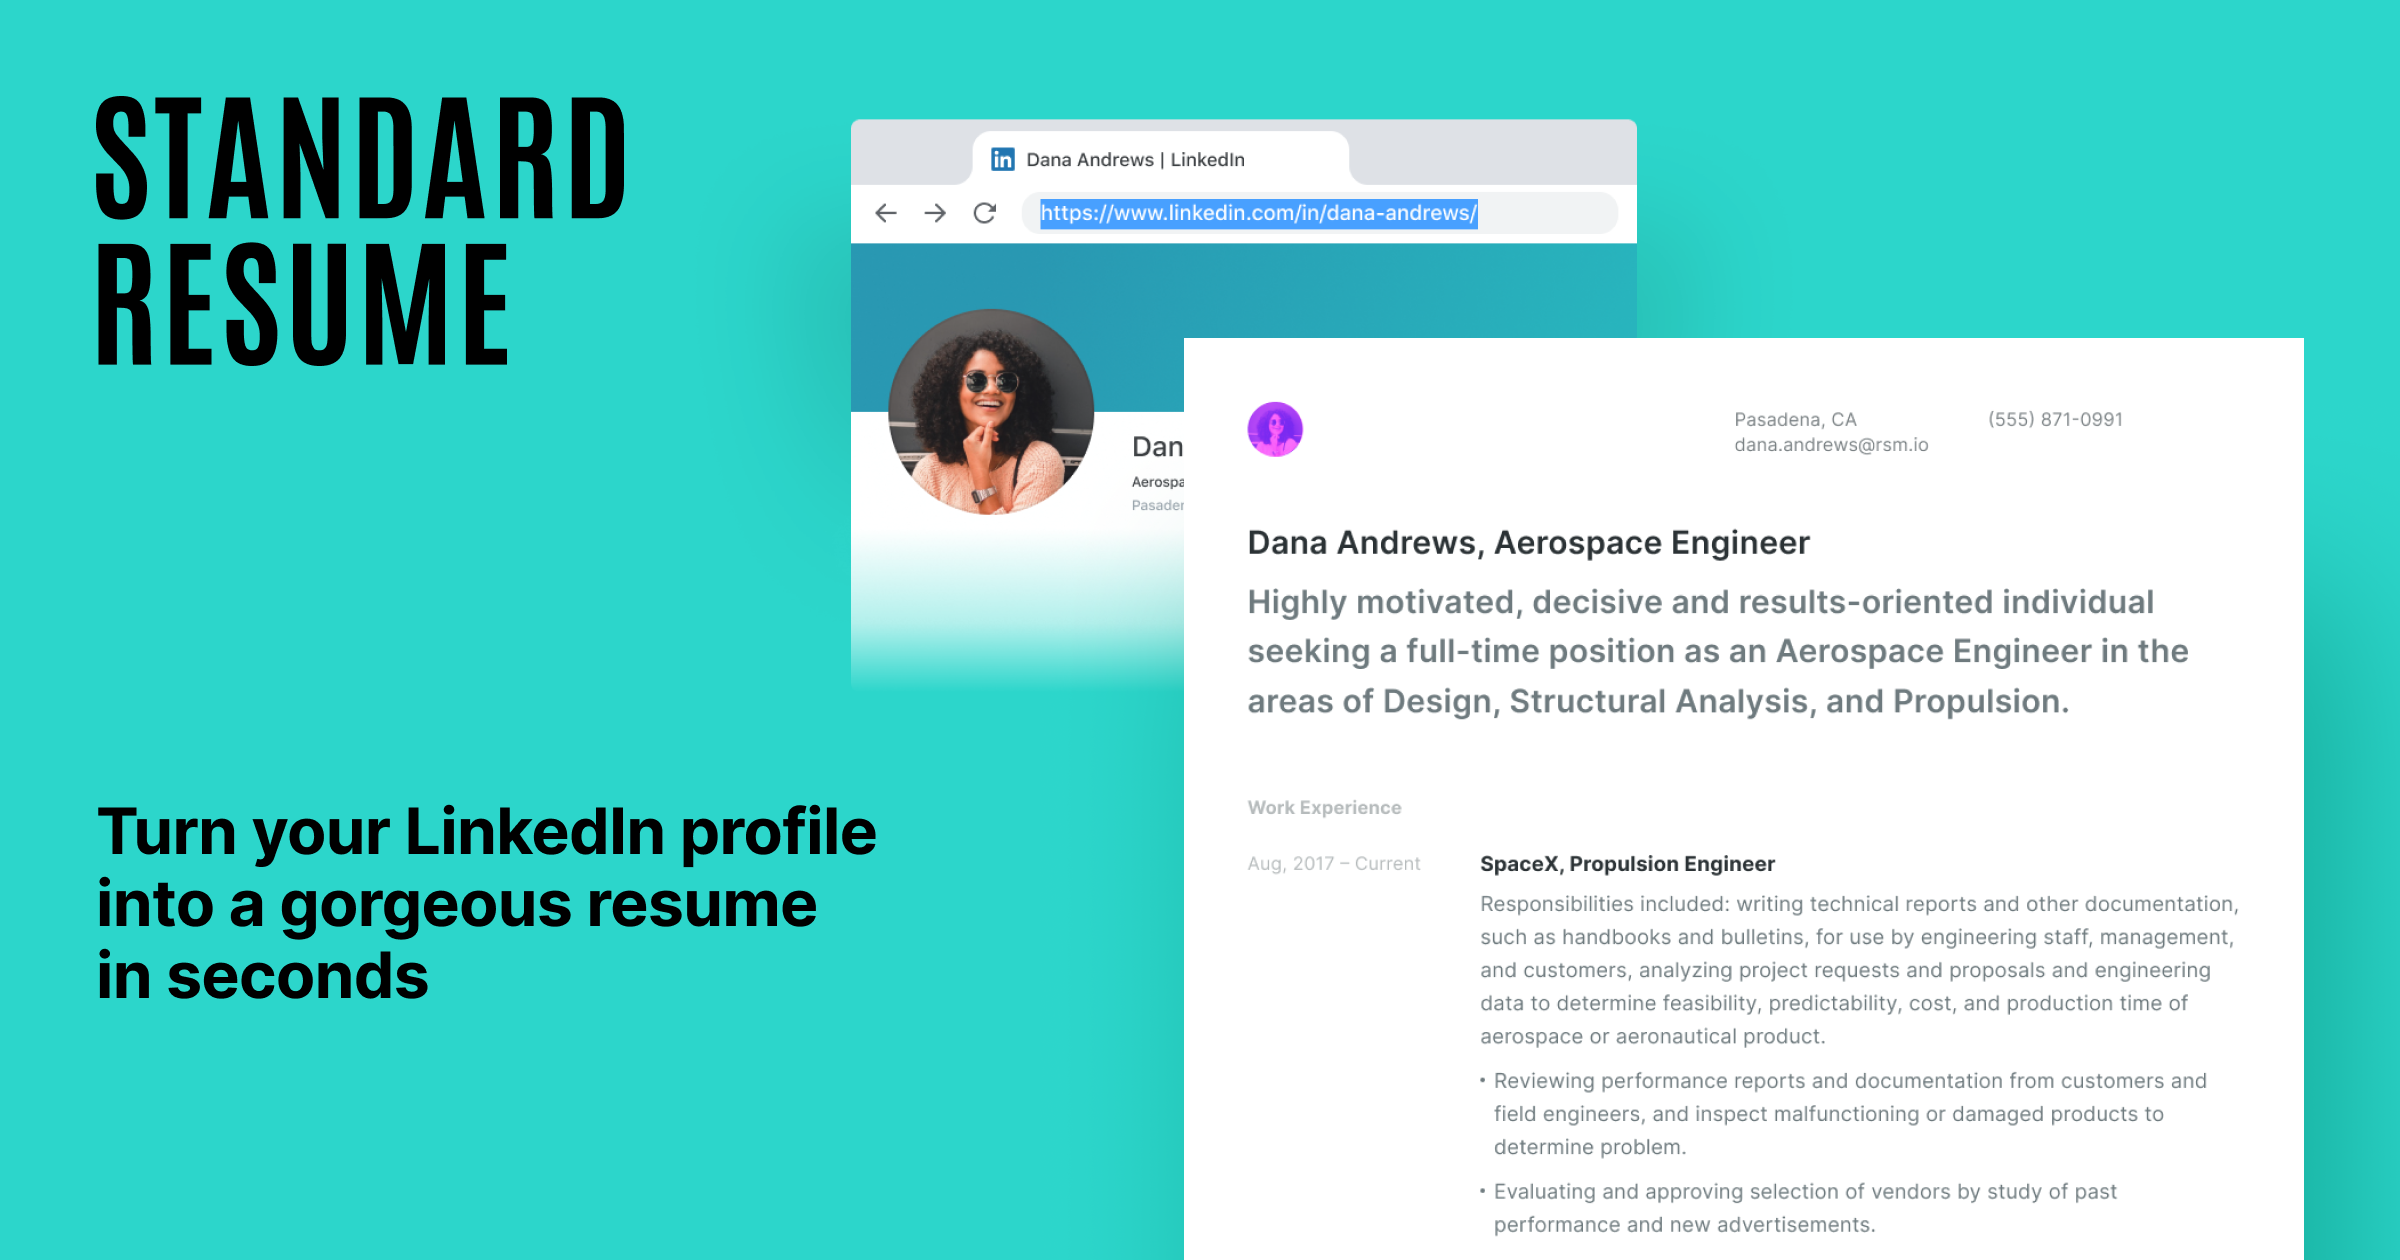 Calculator design idea #203: Turn Your LinkedIn Profile into a Modern Resume (Web & PDF)